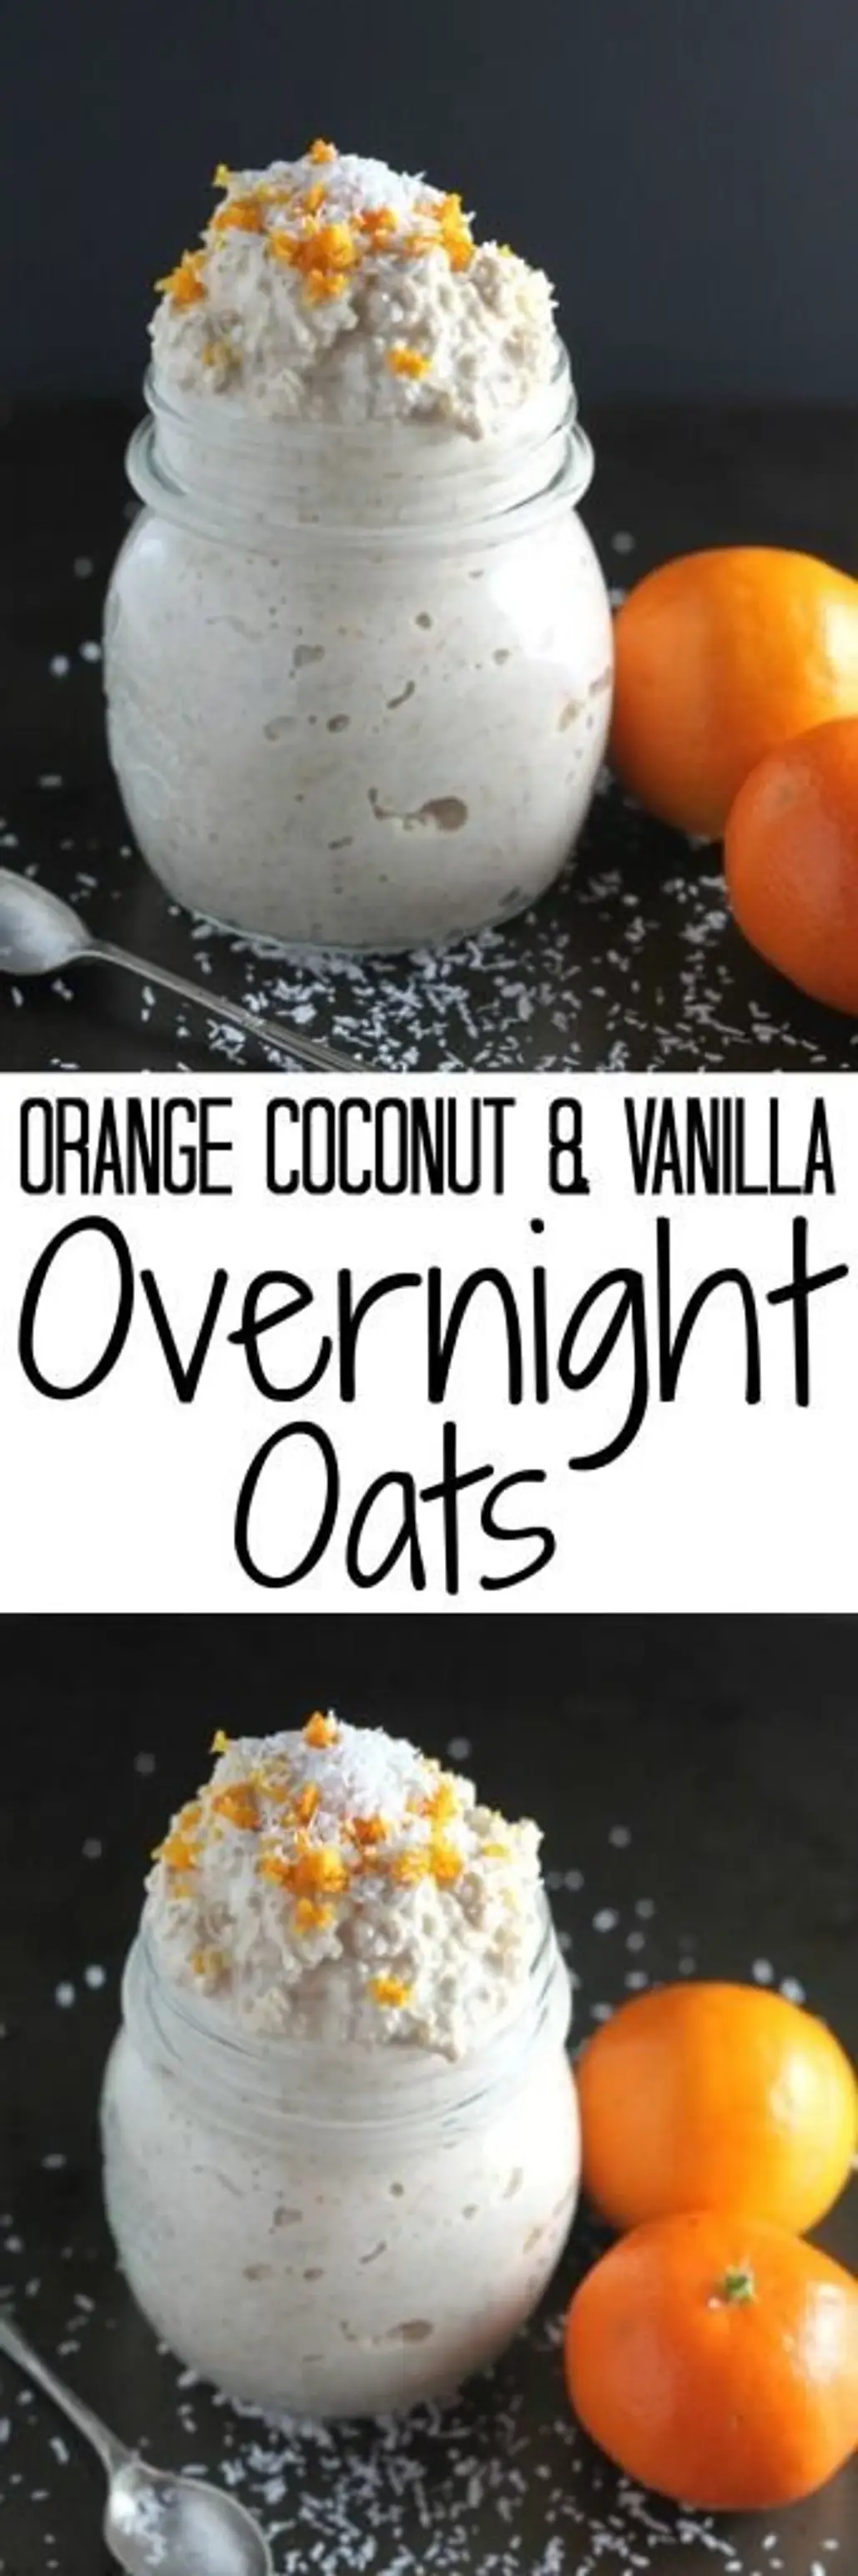 Orange, Coconut and Vanilla Overnight Oats